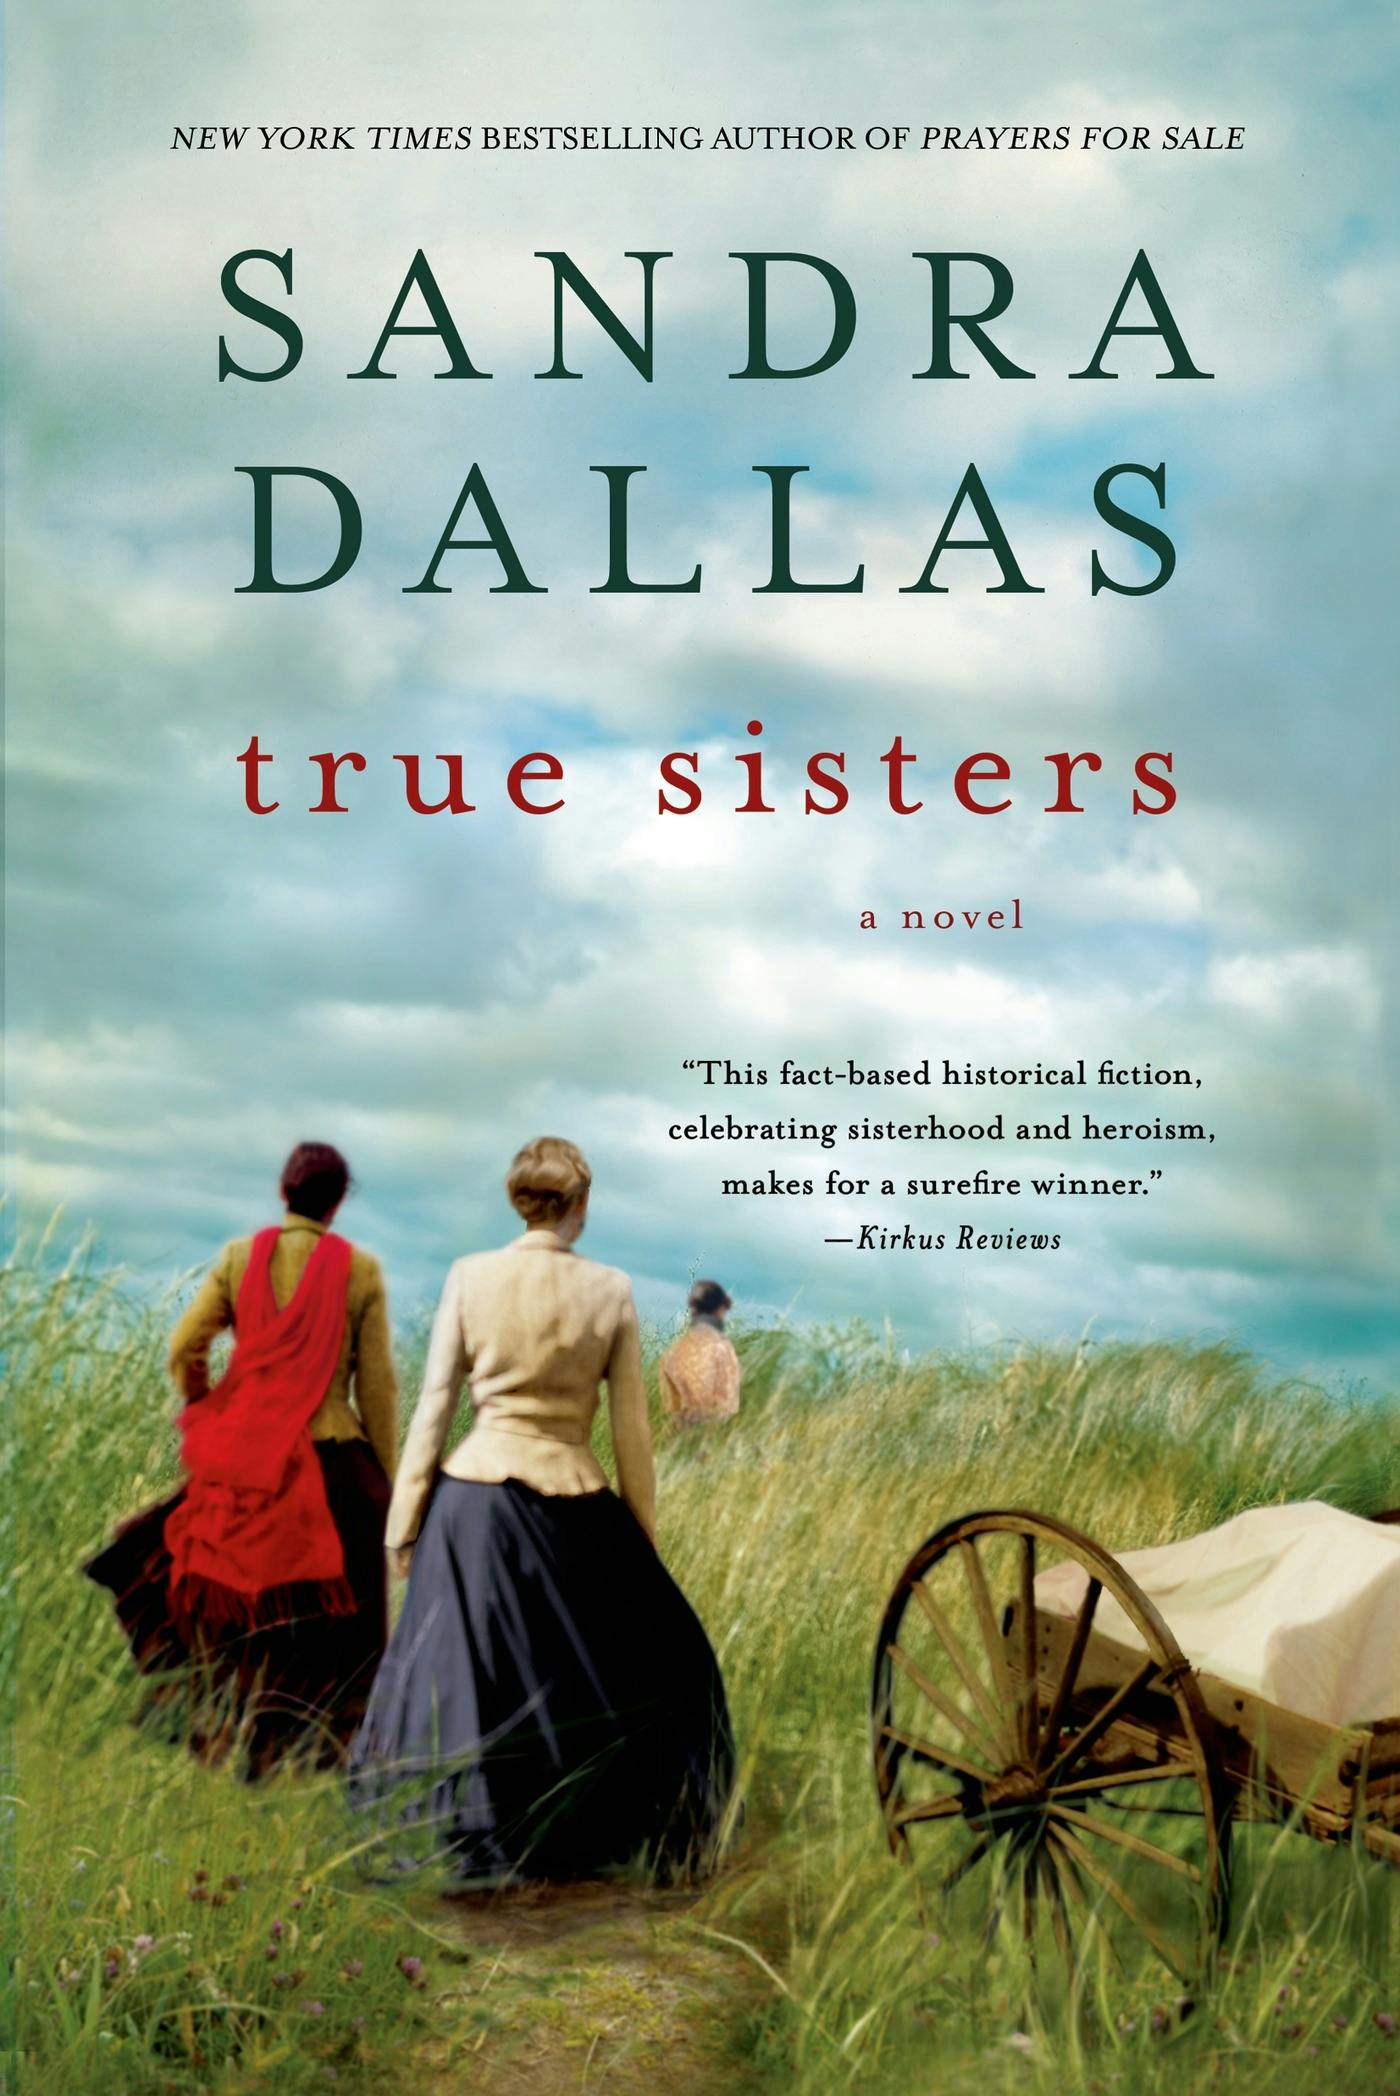 True sisters. The novel. True author. Novel based